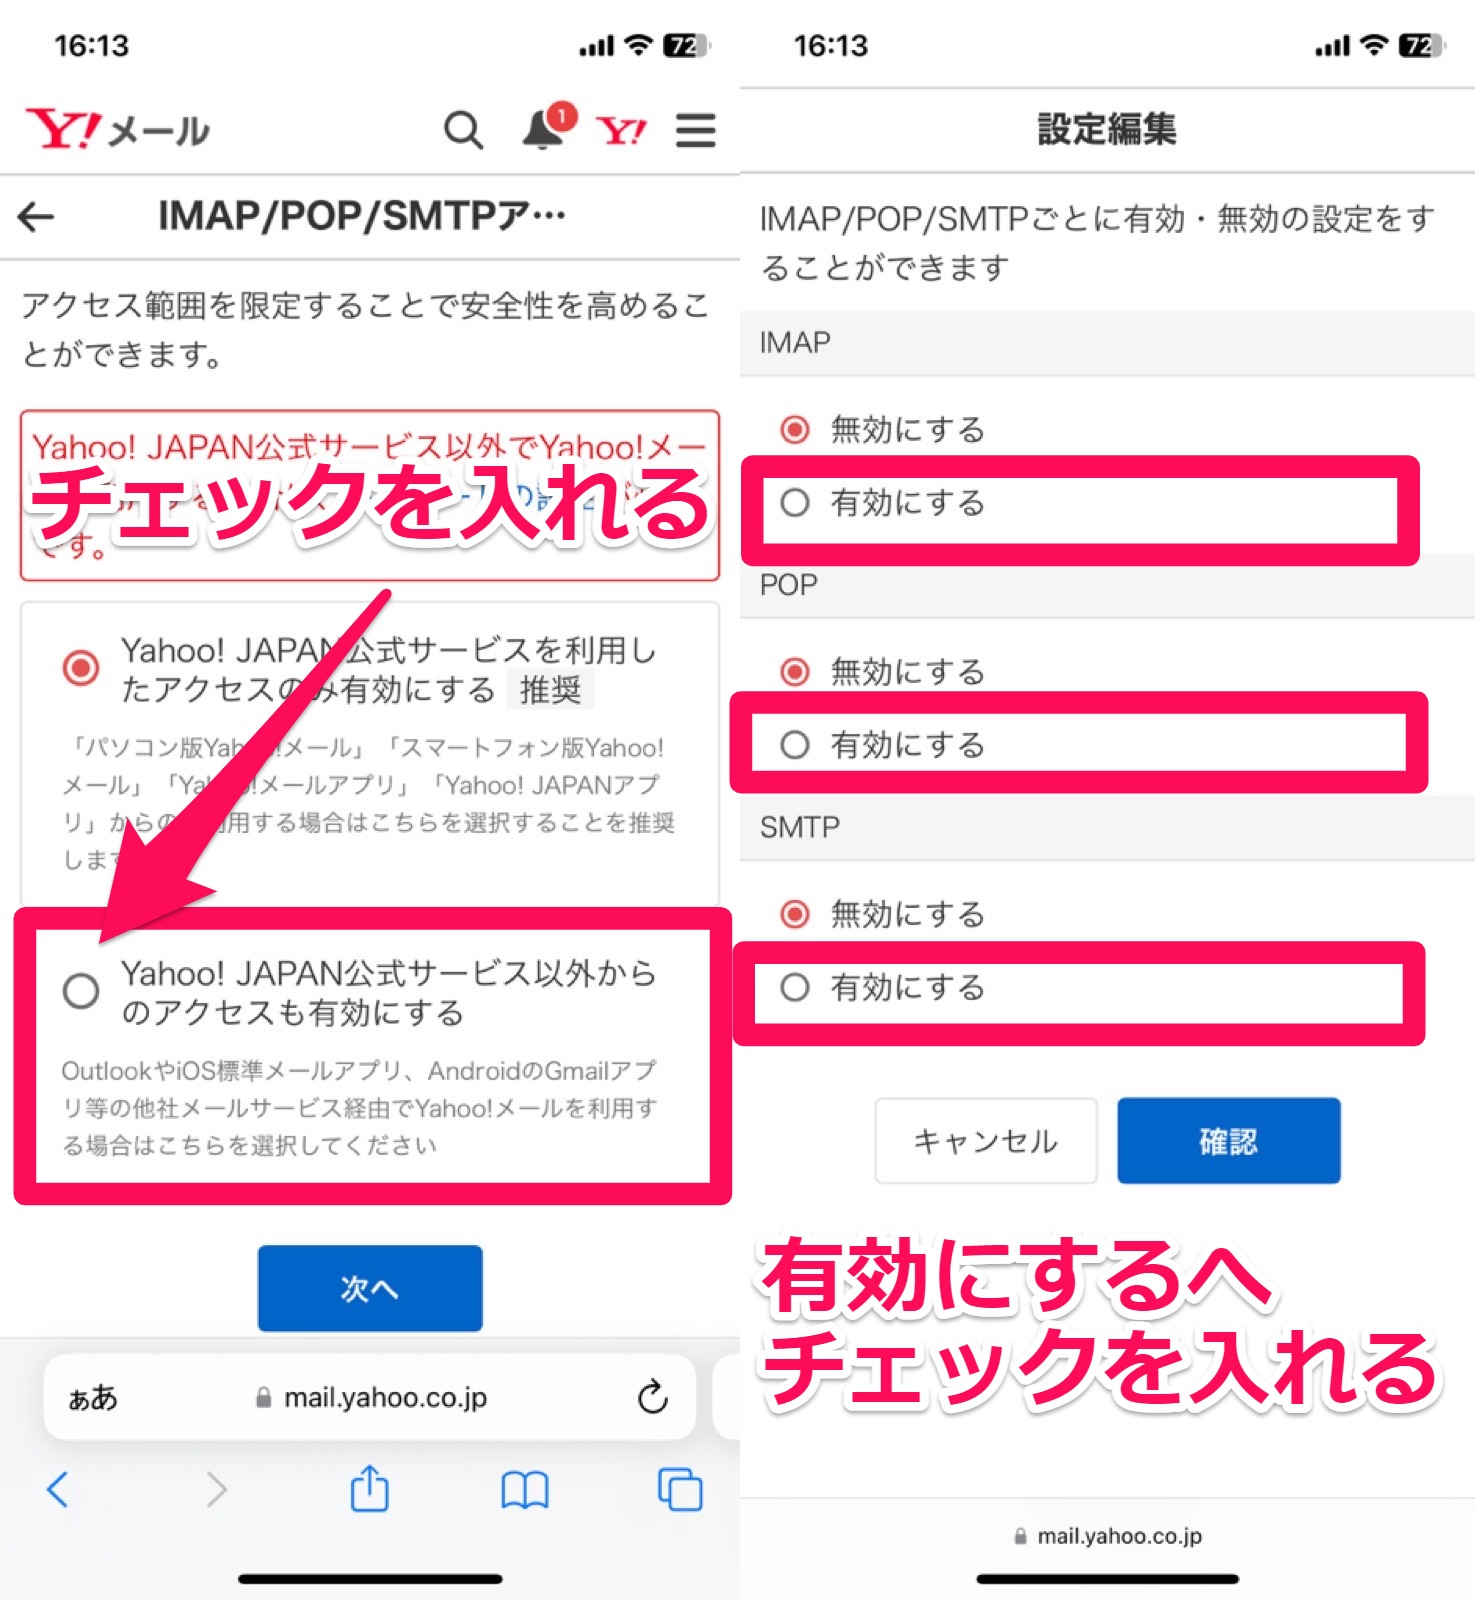 「Yahoo! JAPAN公式サービス以外からのアクセスも有効にする」にチェック